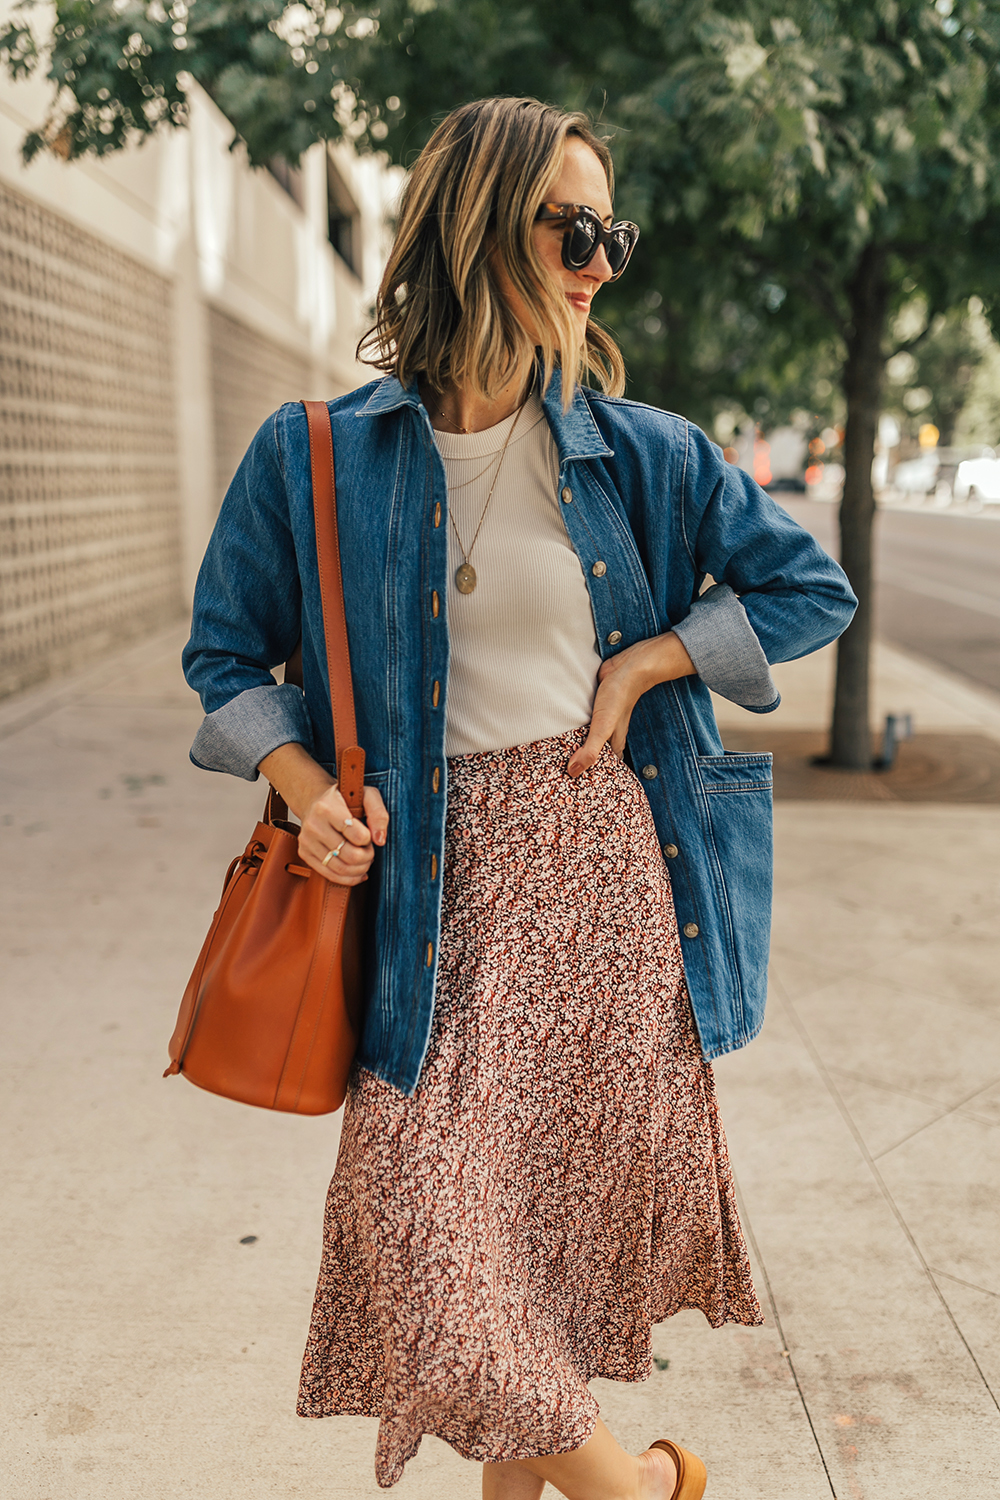 livvyland-blog-olivia-watson-austin-texas-fashion-blogger-sezane-will-jacket-chore-utility-floral-skirt-fall-outfit-idea-2